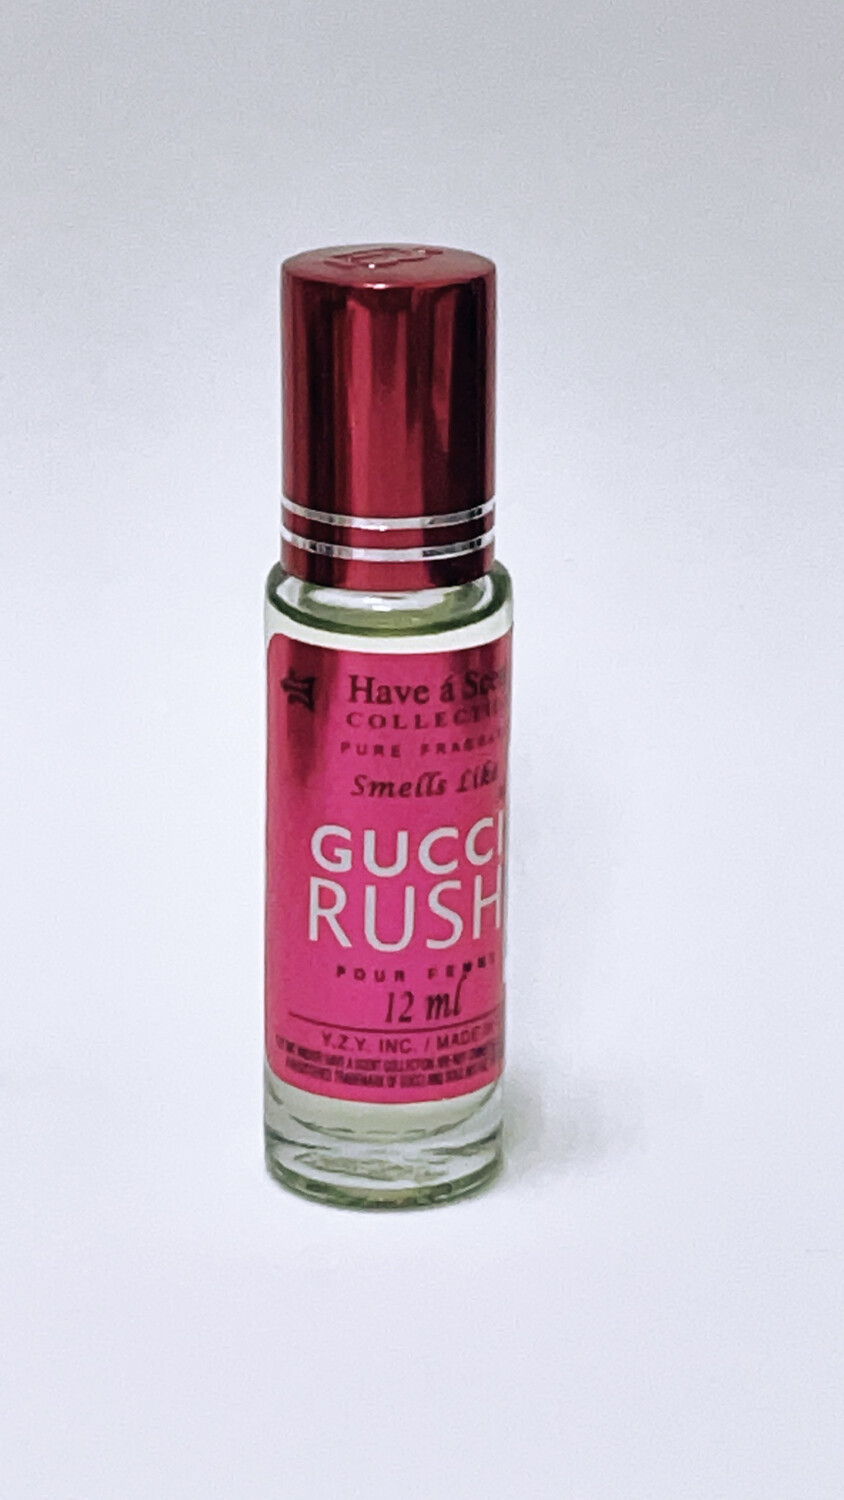 gucci rush perfume shop